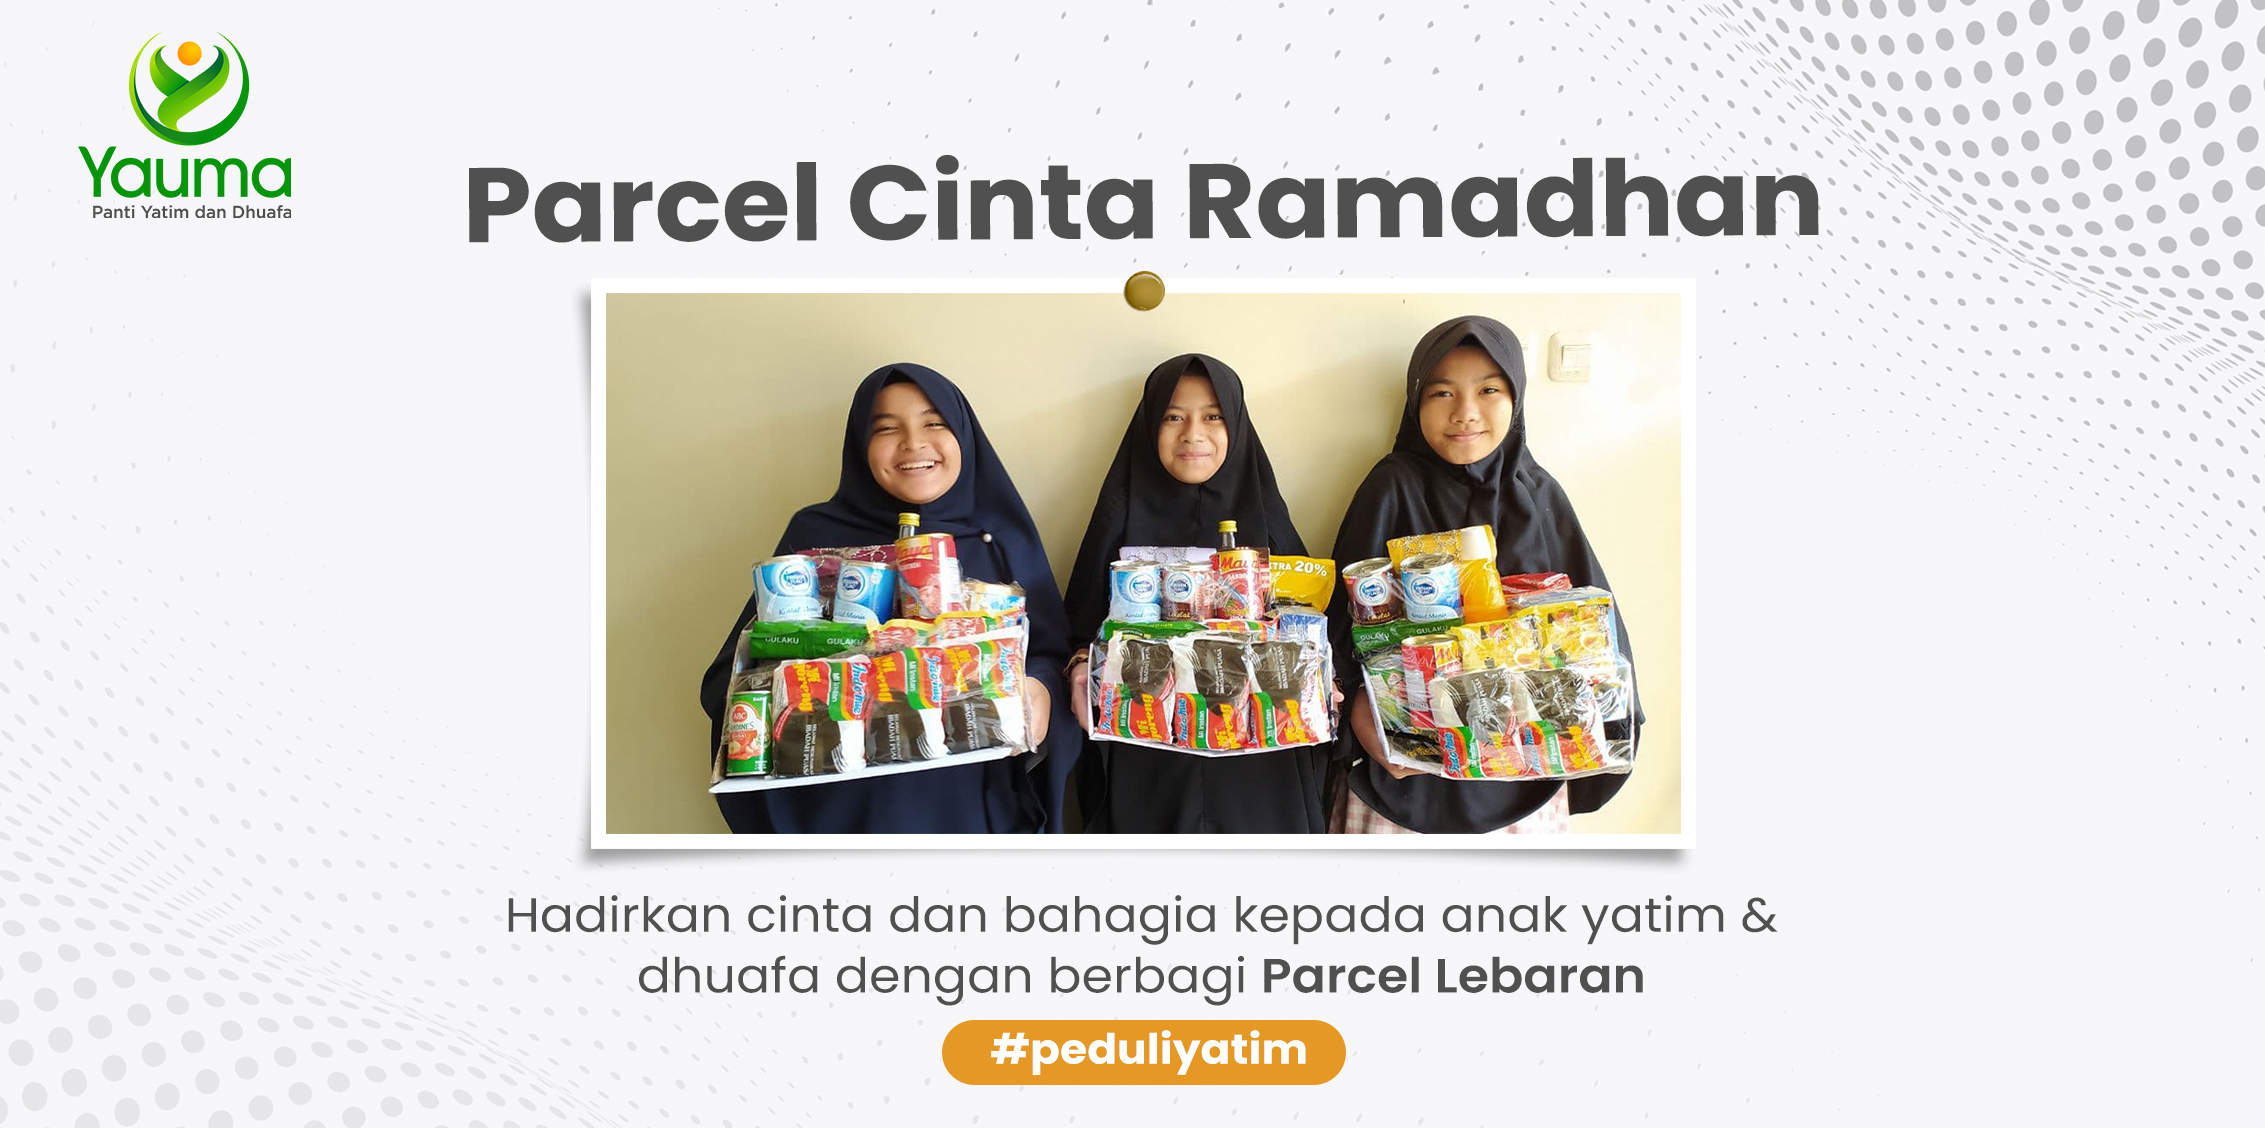 Parcel Cinta Ramadhan